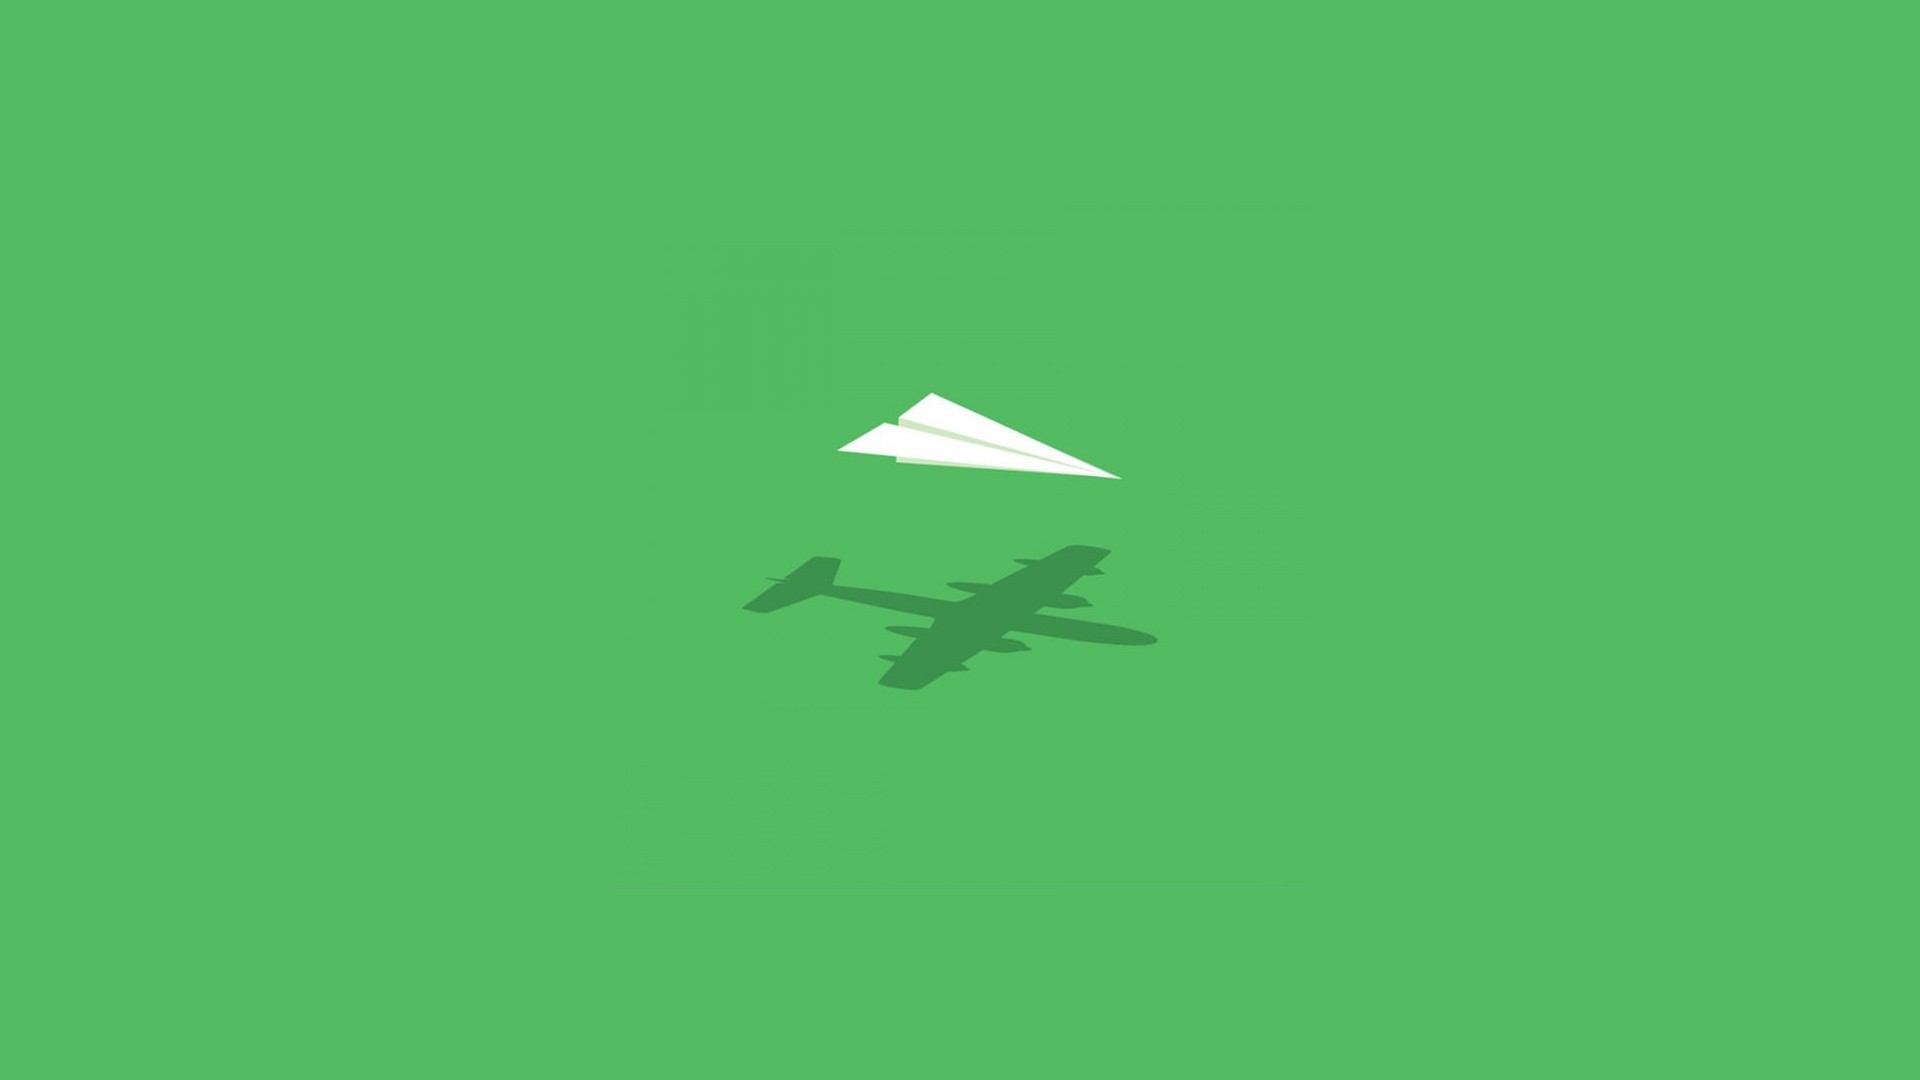 #simple, #minimalism, #paper planes, #artwork, #green background wallpaper. Mocah HD Wallpaper